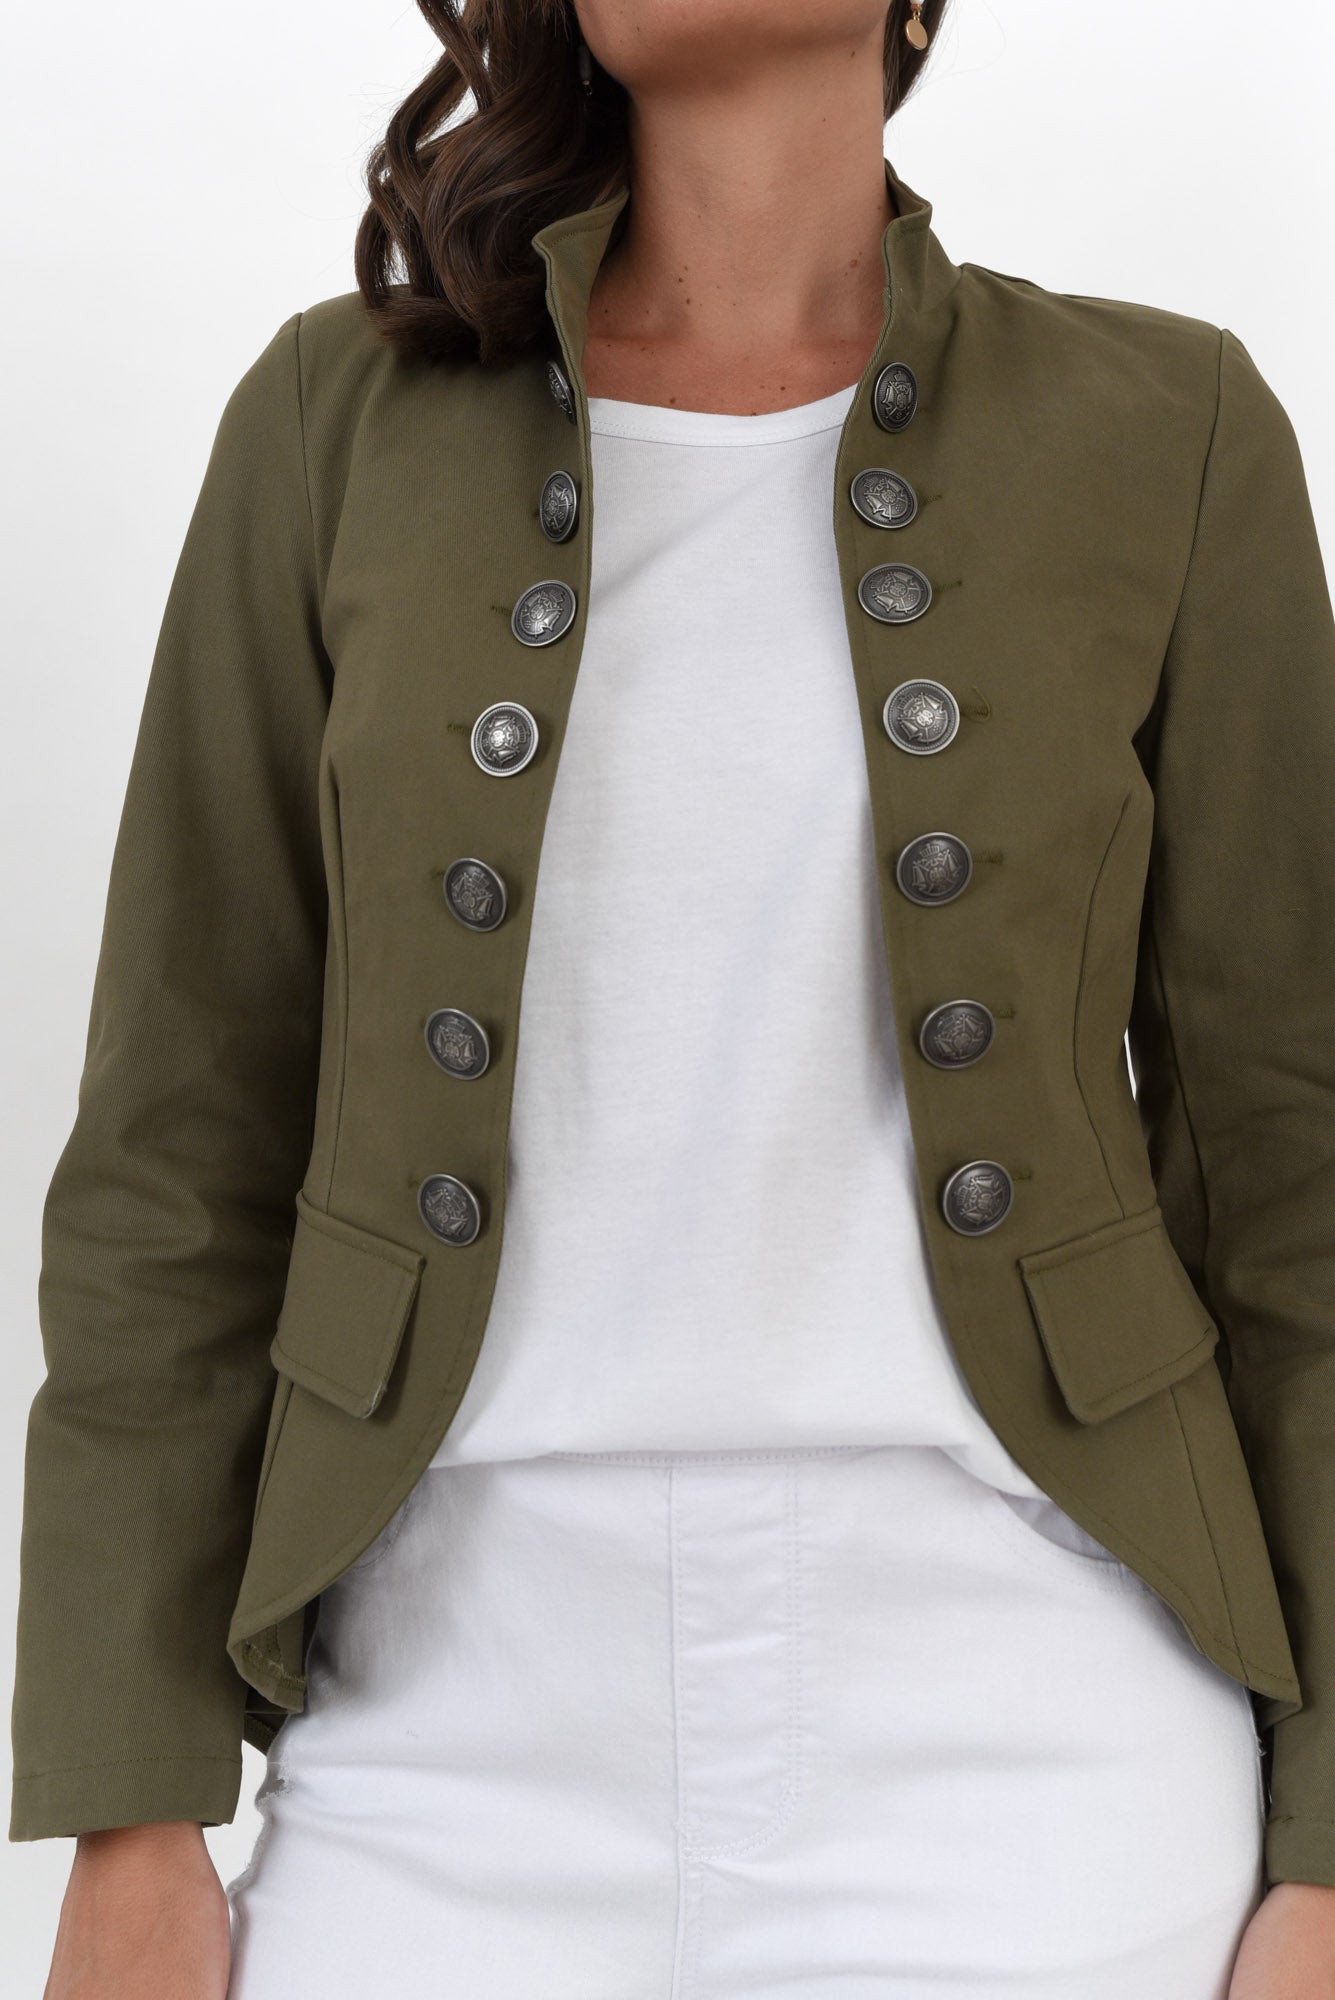 Hugo Boss Khaki Stretch Cotton Military-Style Jacket - Queen Letizia  Outerwear - Queen Letizia Style